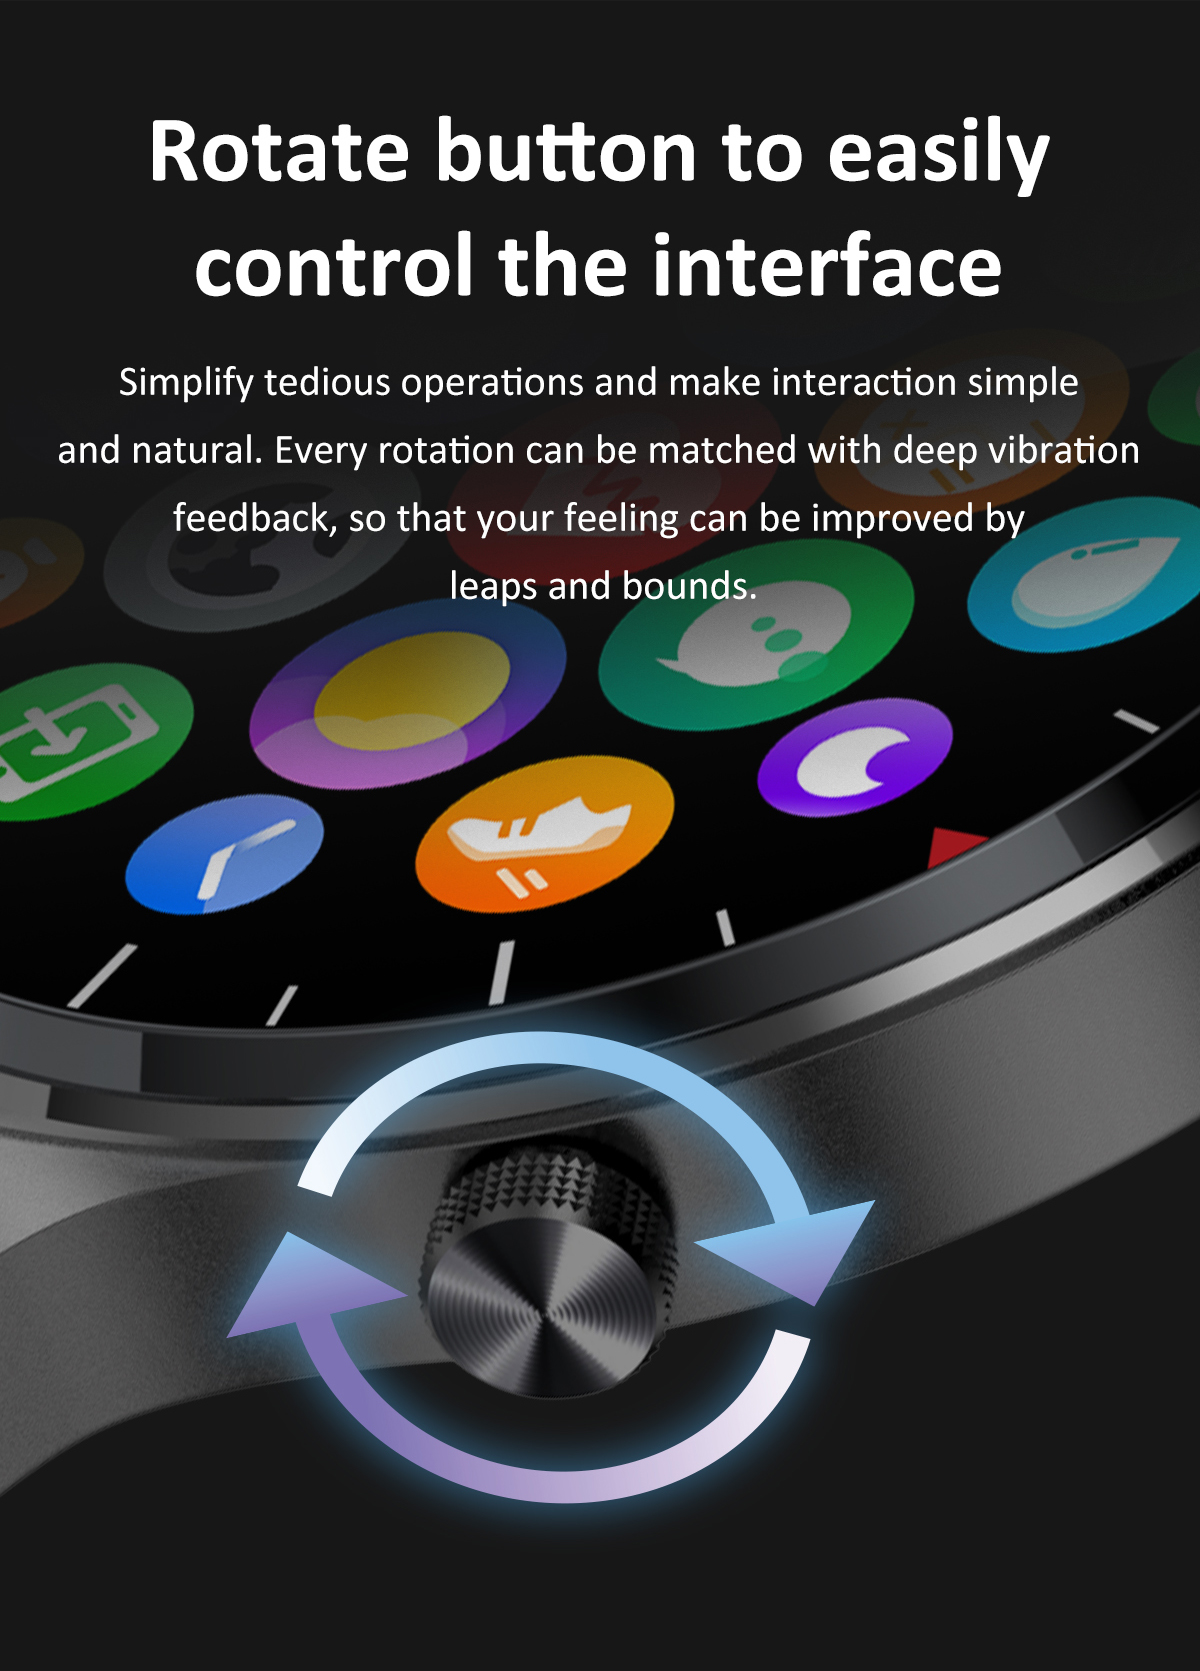 Smart watch H20 - 1.28-inch IPS - 230mAh battery-capacity - IP68 waterproof - Bluetooth 5.1 - standby up to three days - silver steel strap - Amman Jordan - Pccircle